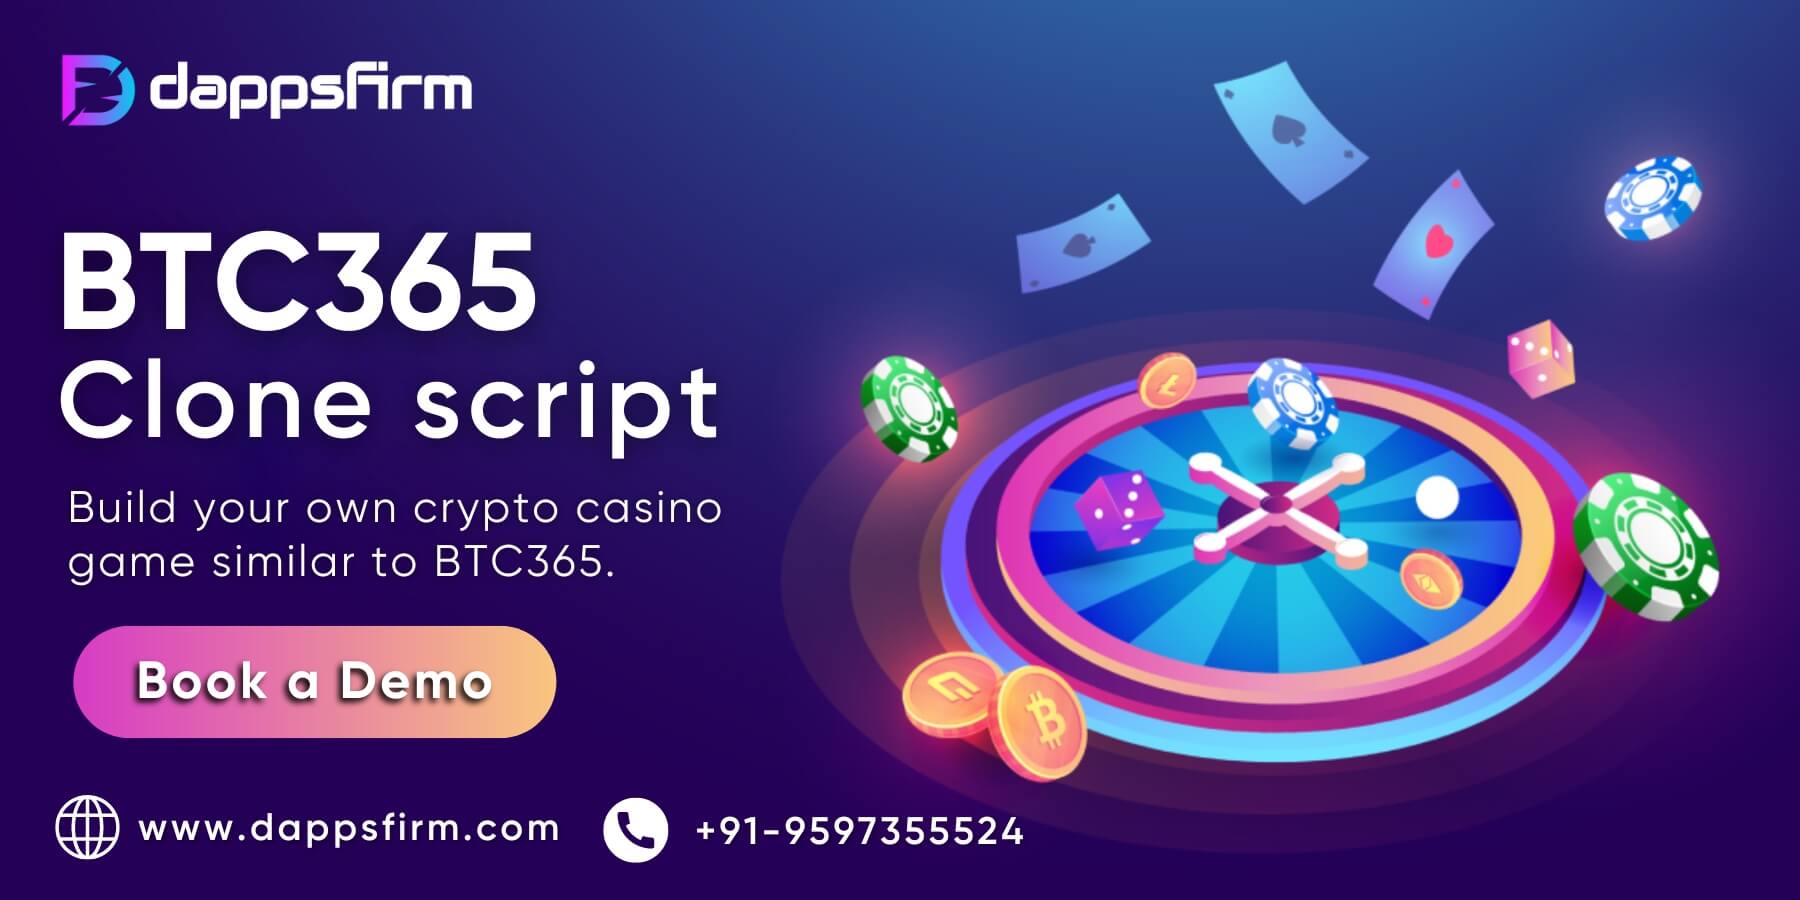 BTC365 Clone Script To Create An Exciting Crypto Gambling Platform